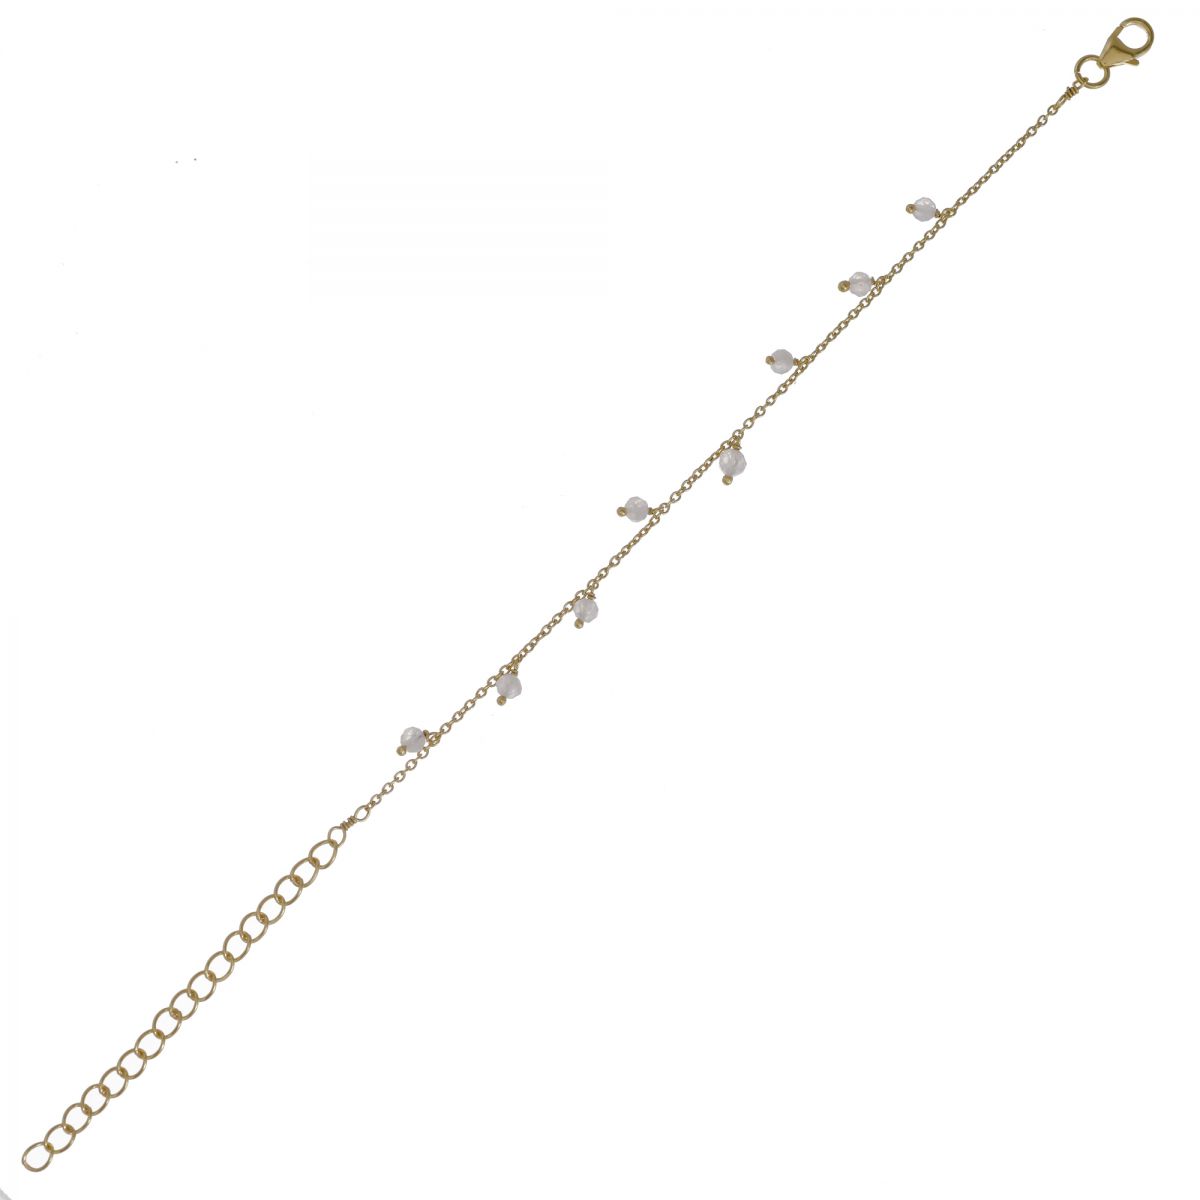 ff bracelet 3mm 8 pendants moonstone beads gold plated